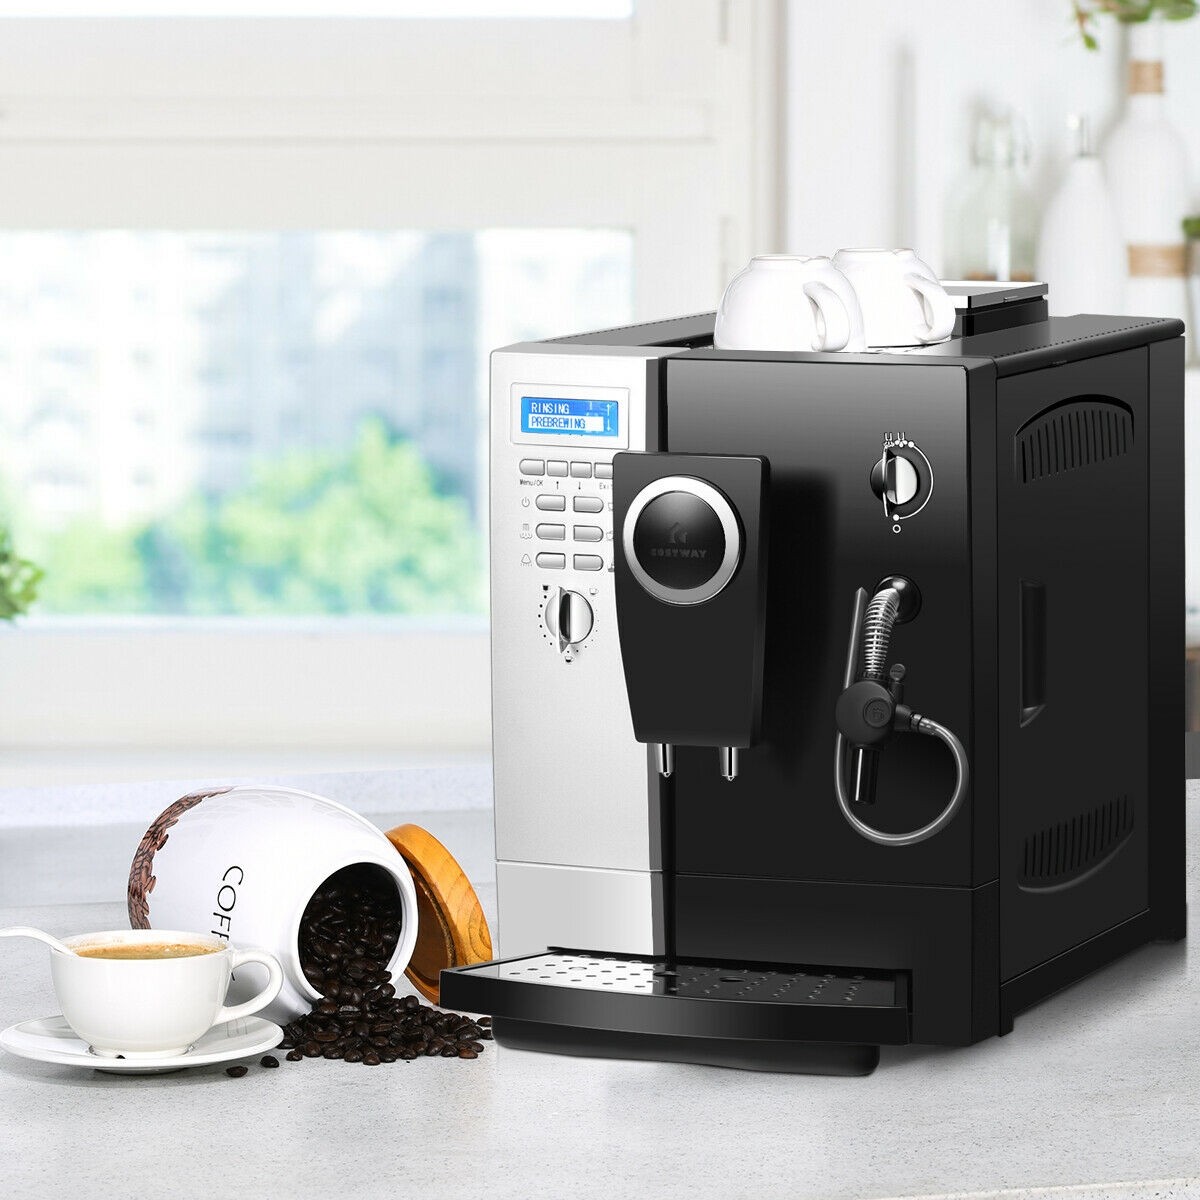 Super - Automatic Espresso Maker Machine With Milk Frother